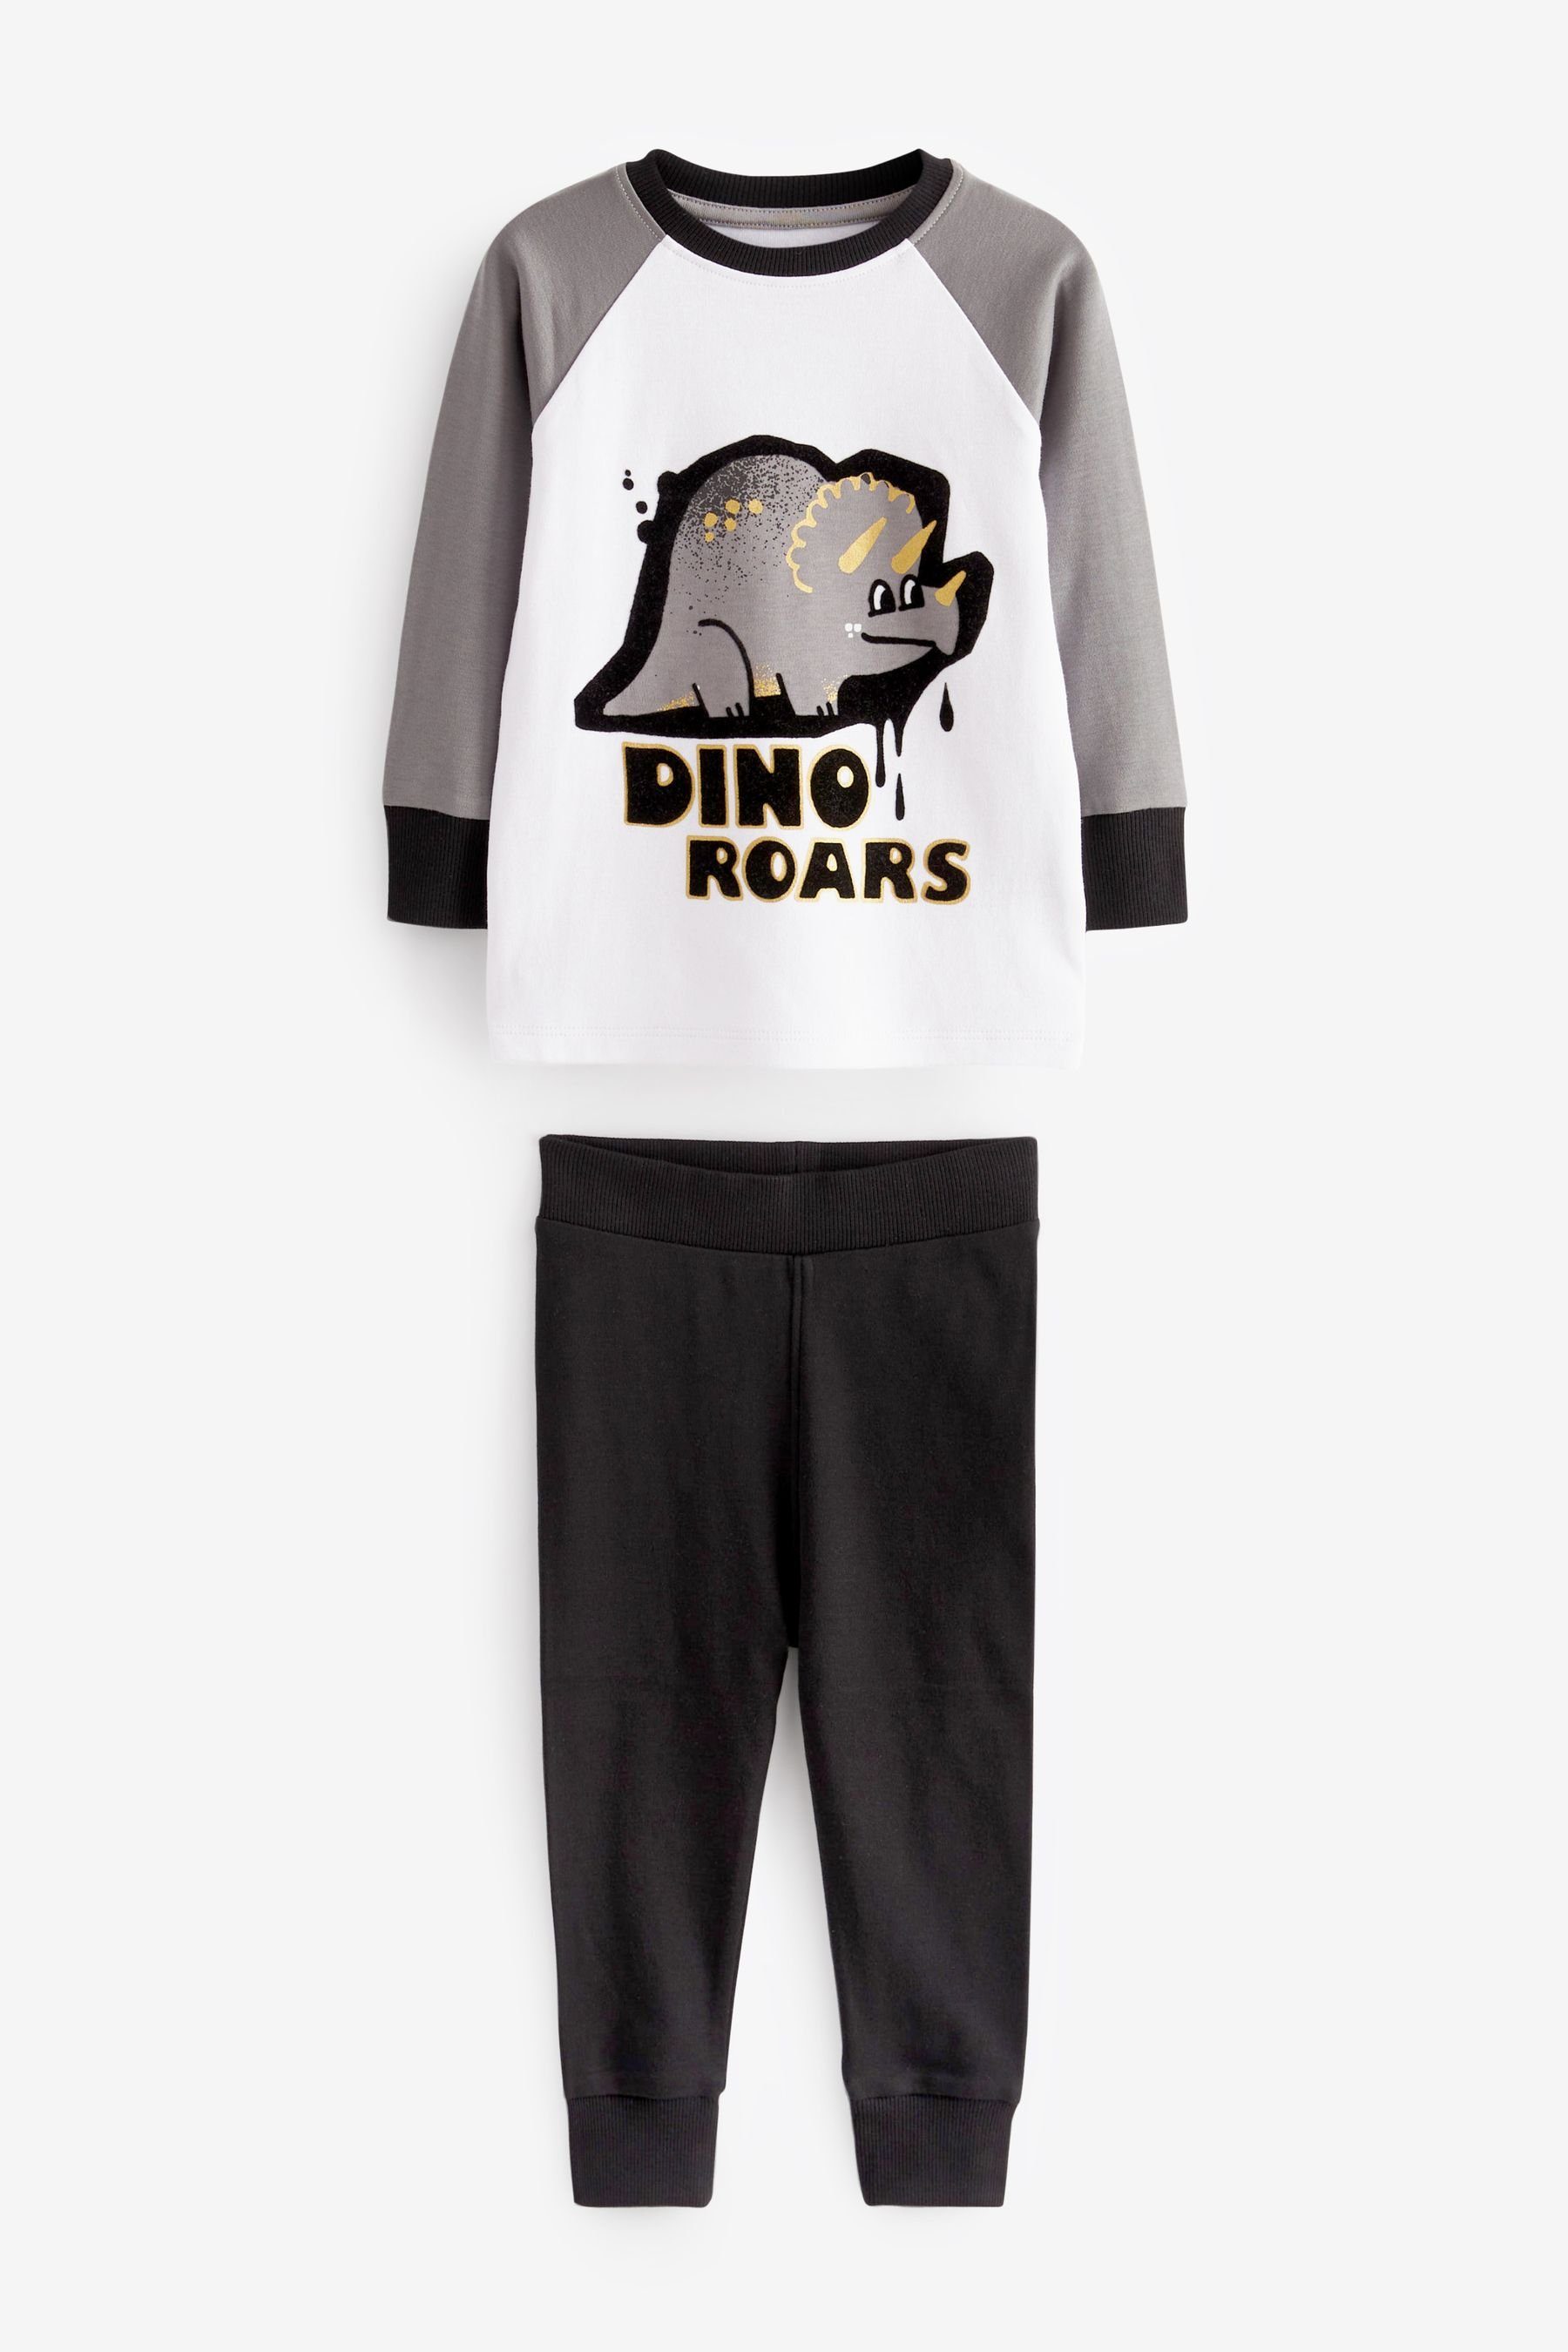 3er-Pack Dinosaur Black/Gold Schlafanzüge Next Pyjama (6 Snuggle tlg)